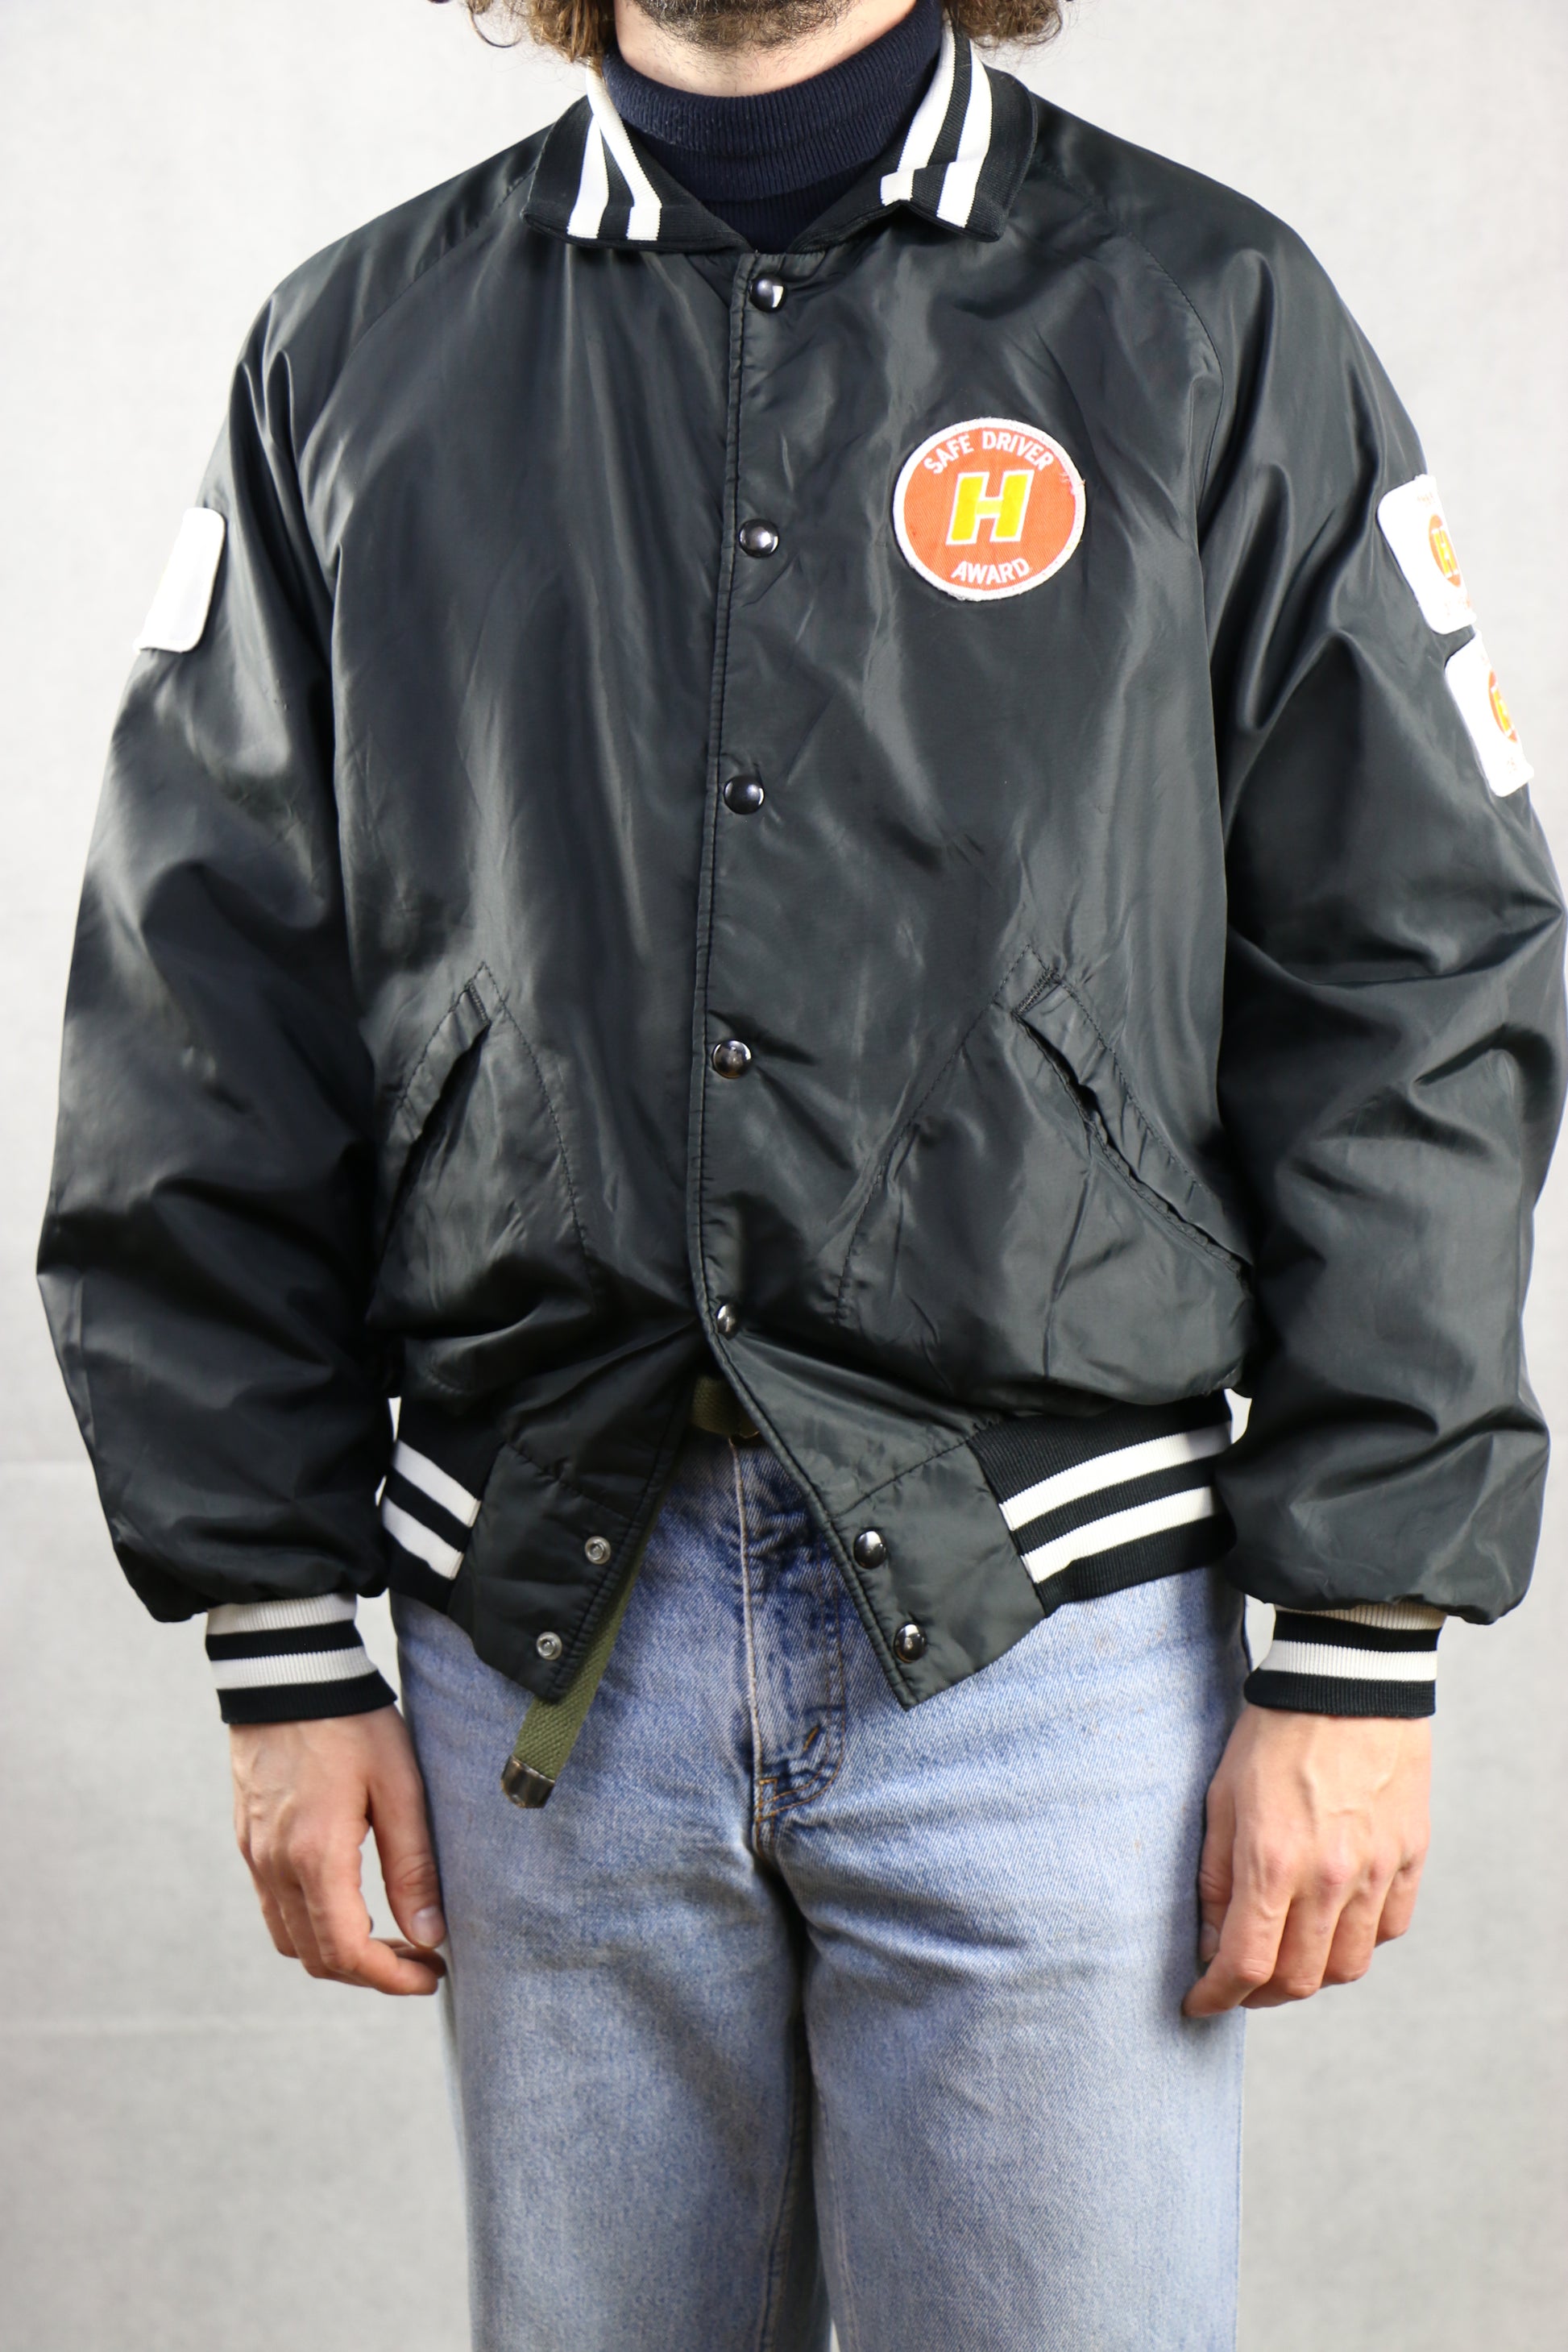 Satin Black Bomber Jacket - vintage clothing clochard92.com